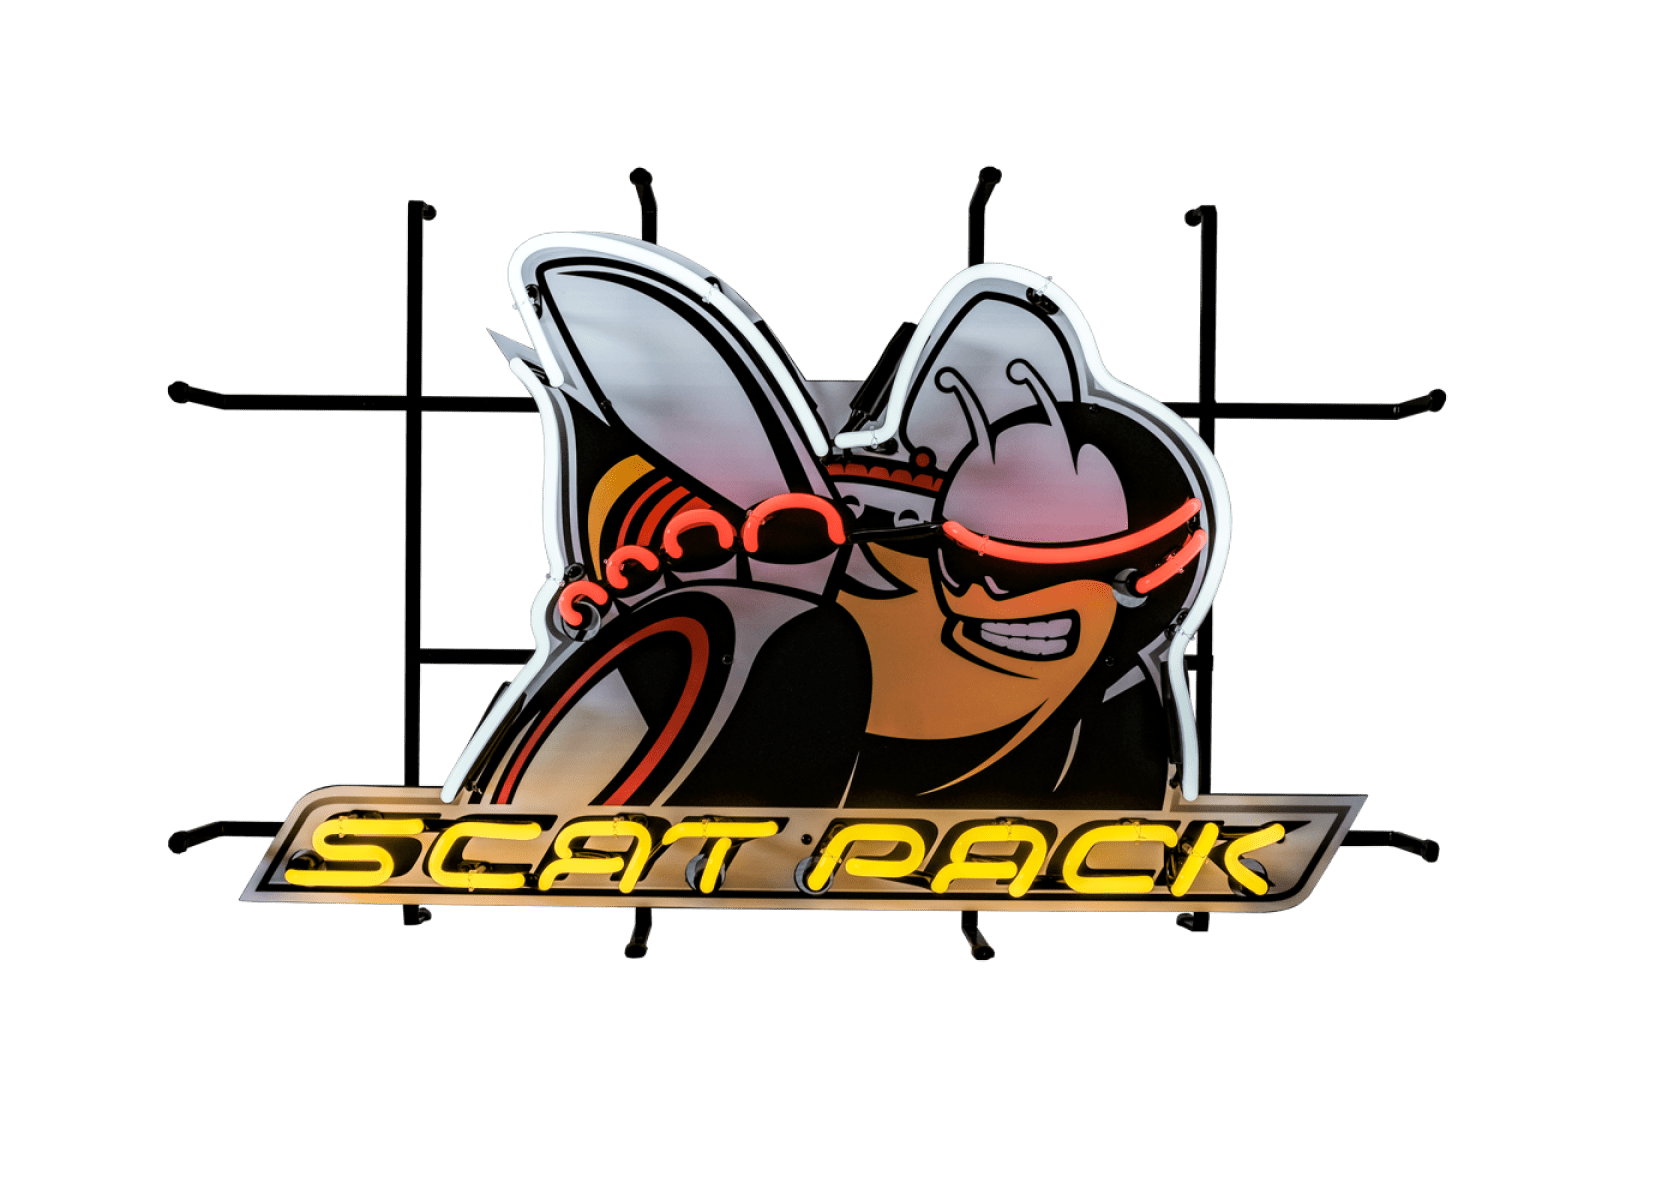 Dodge scat pack neon sign - Auto